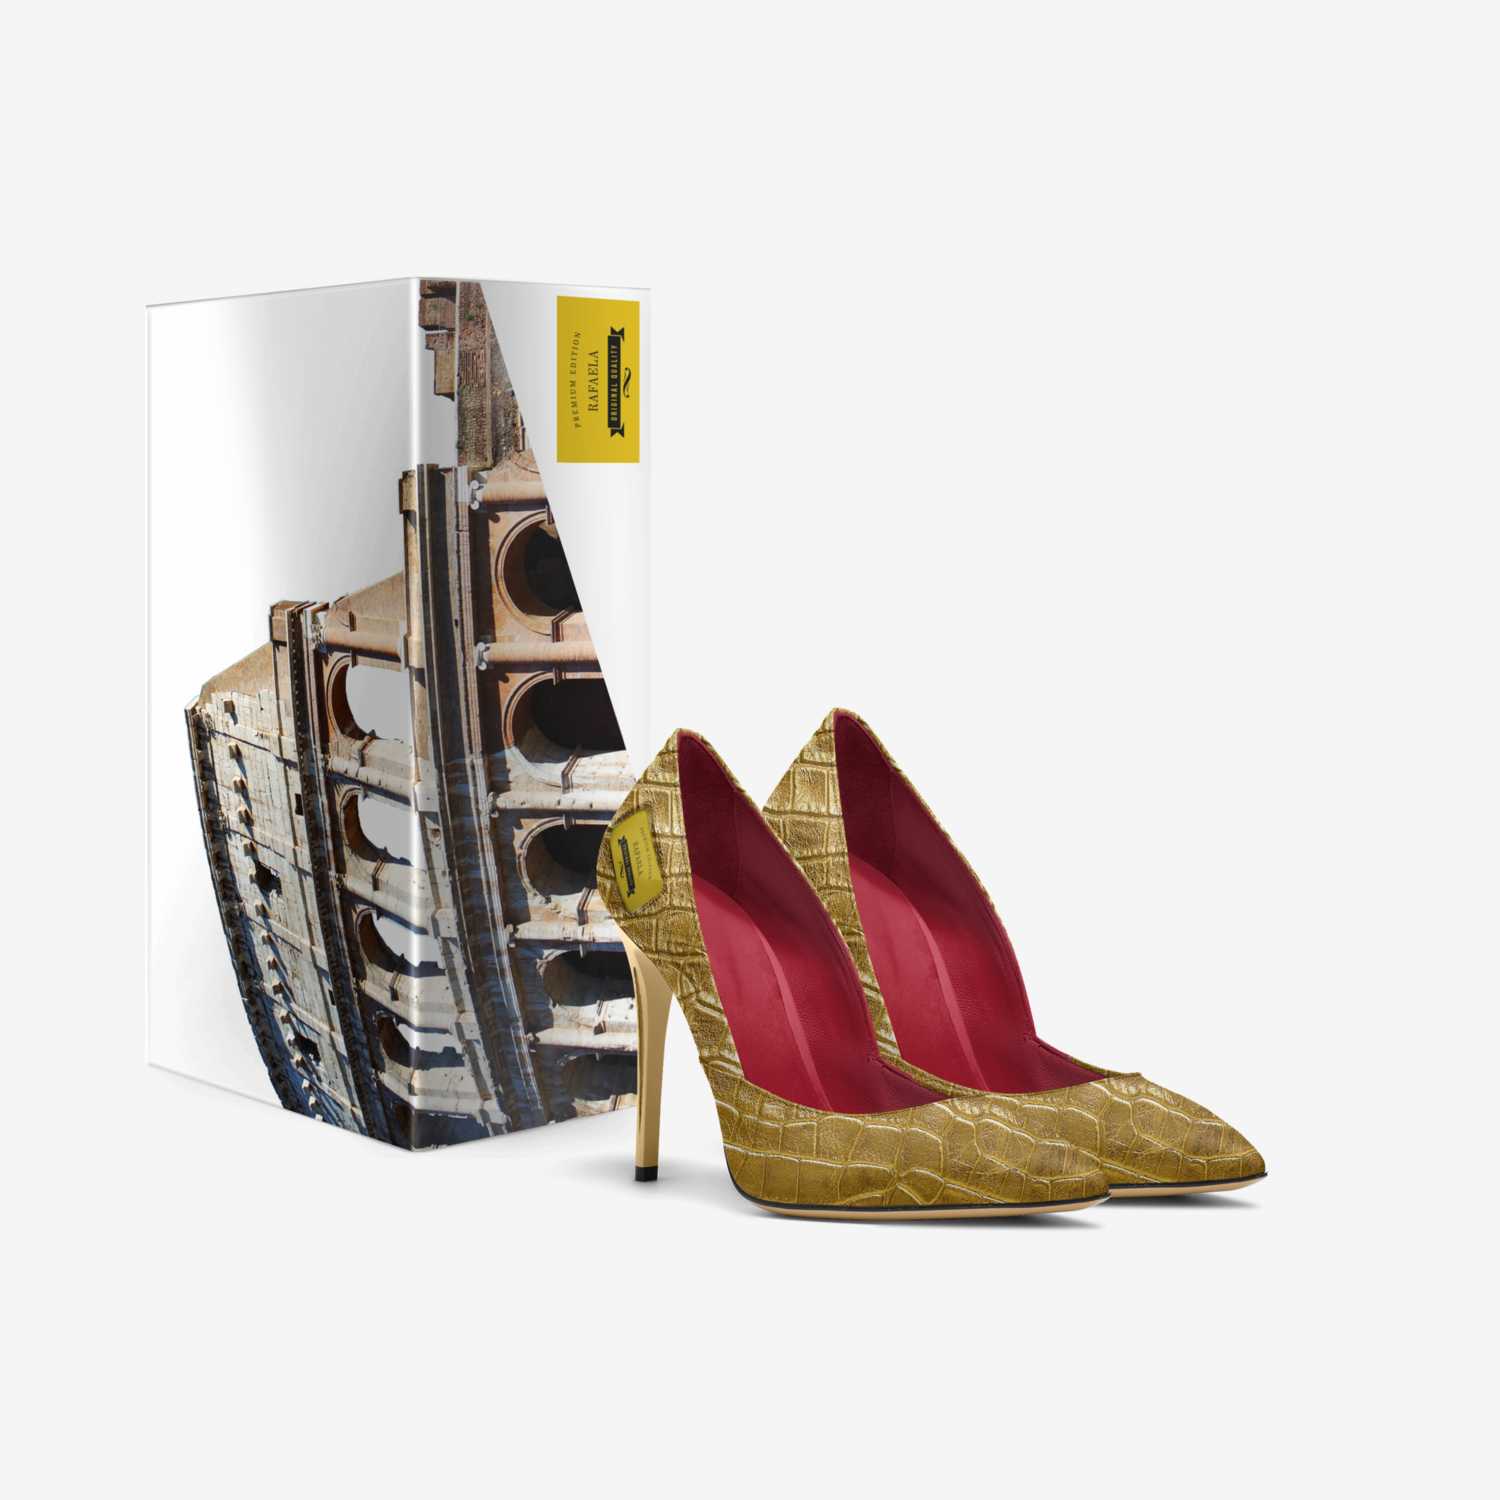 Rafaela custom made in Italy shoes by Rosanny Amaro | Box view